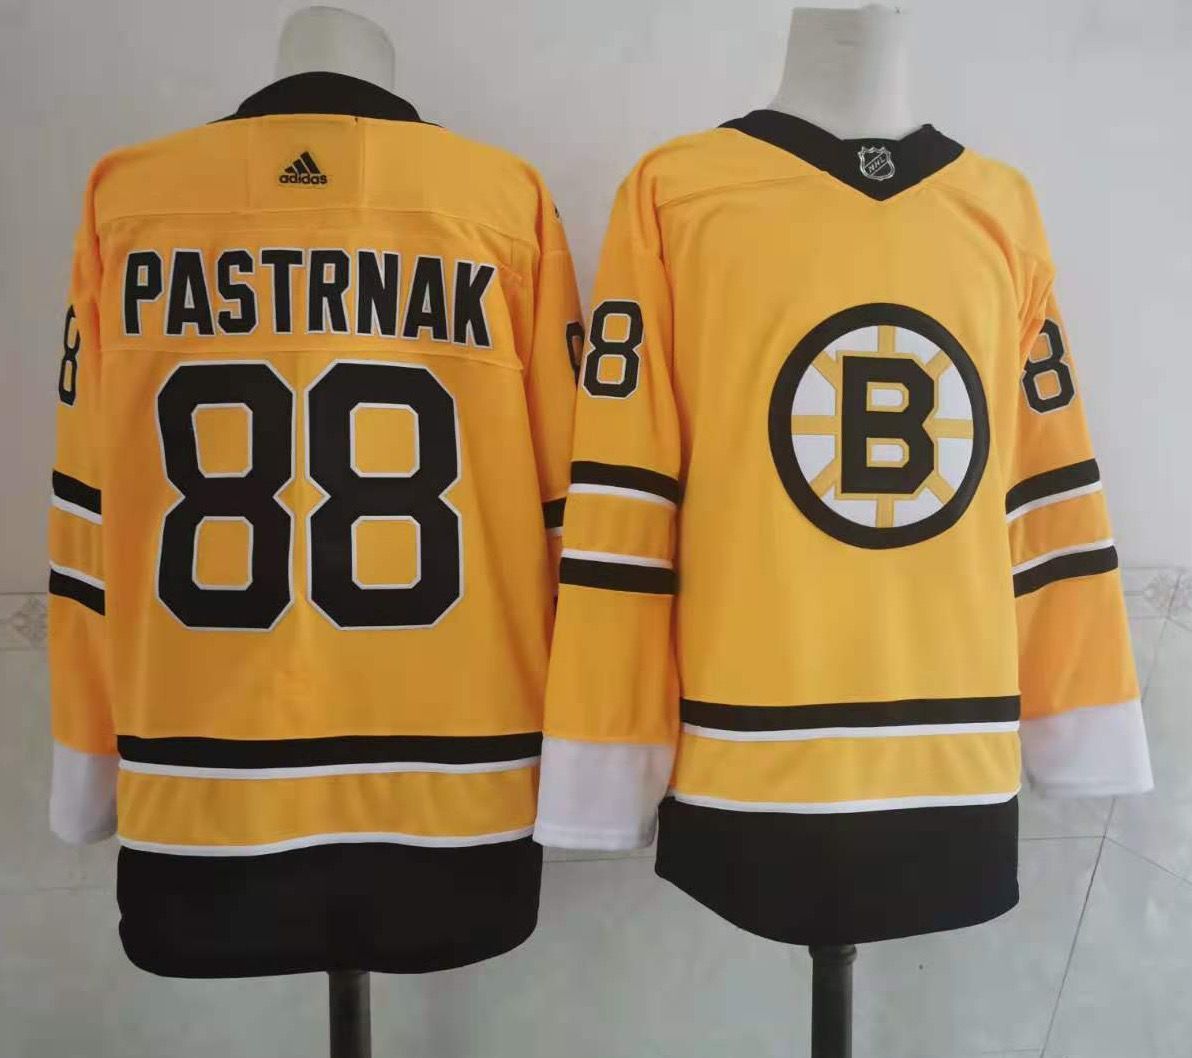 Men's Boston Bruins #88 David Pastrnak Yellow Adidas 2020-21 Stitched NHL Jersey